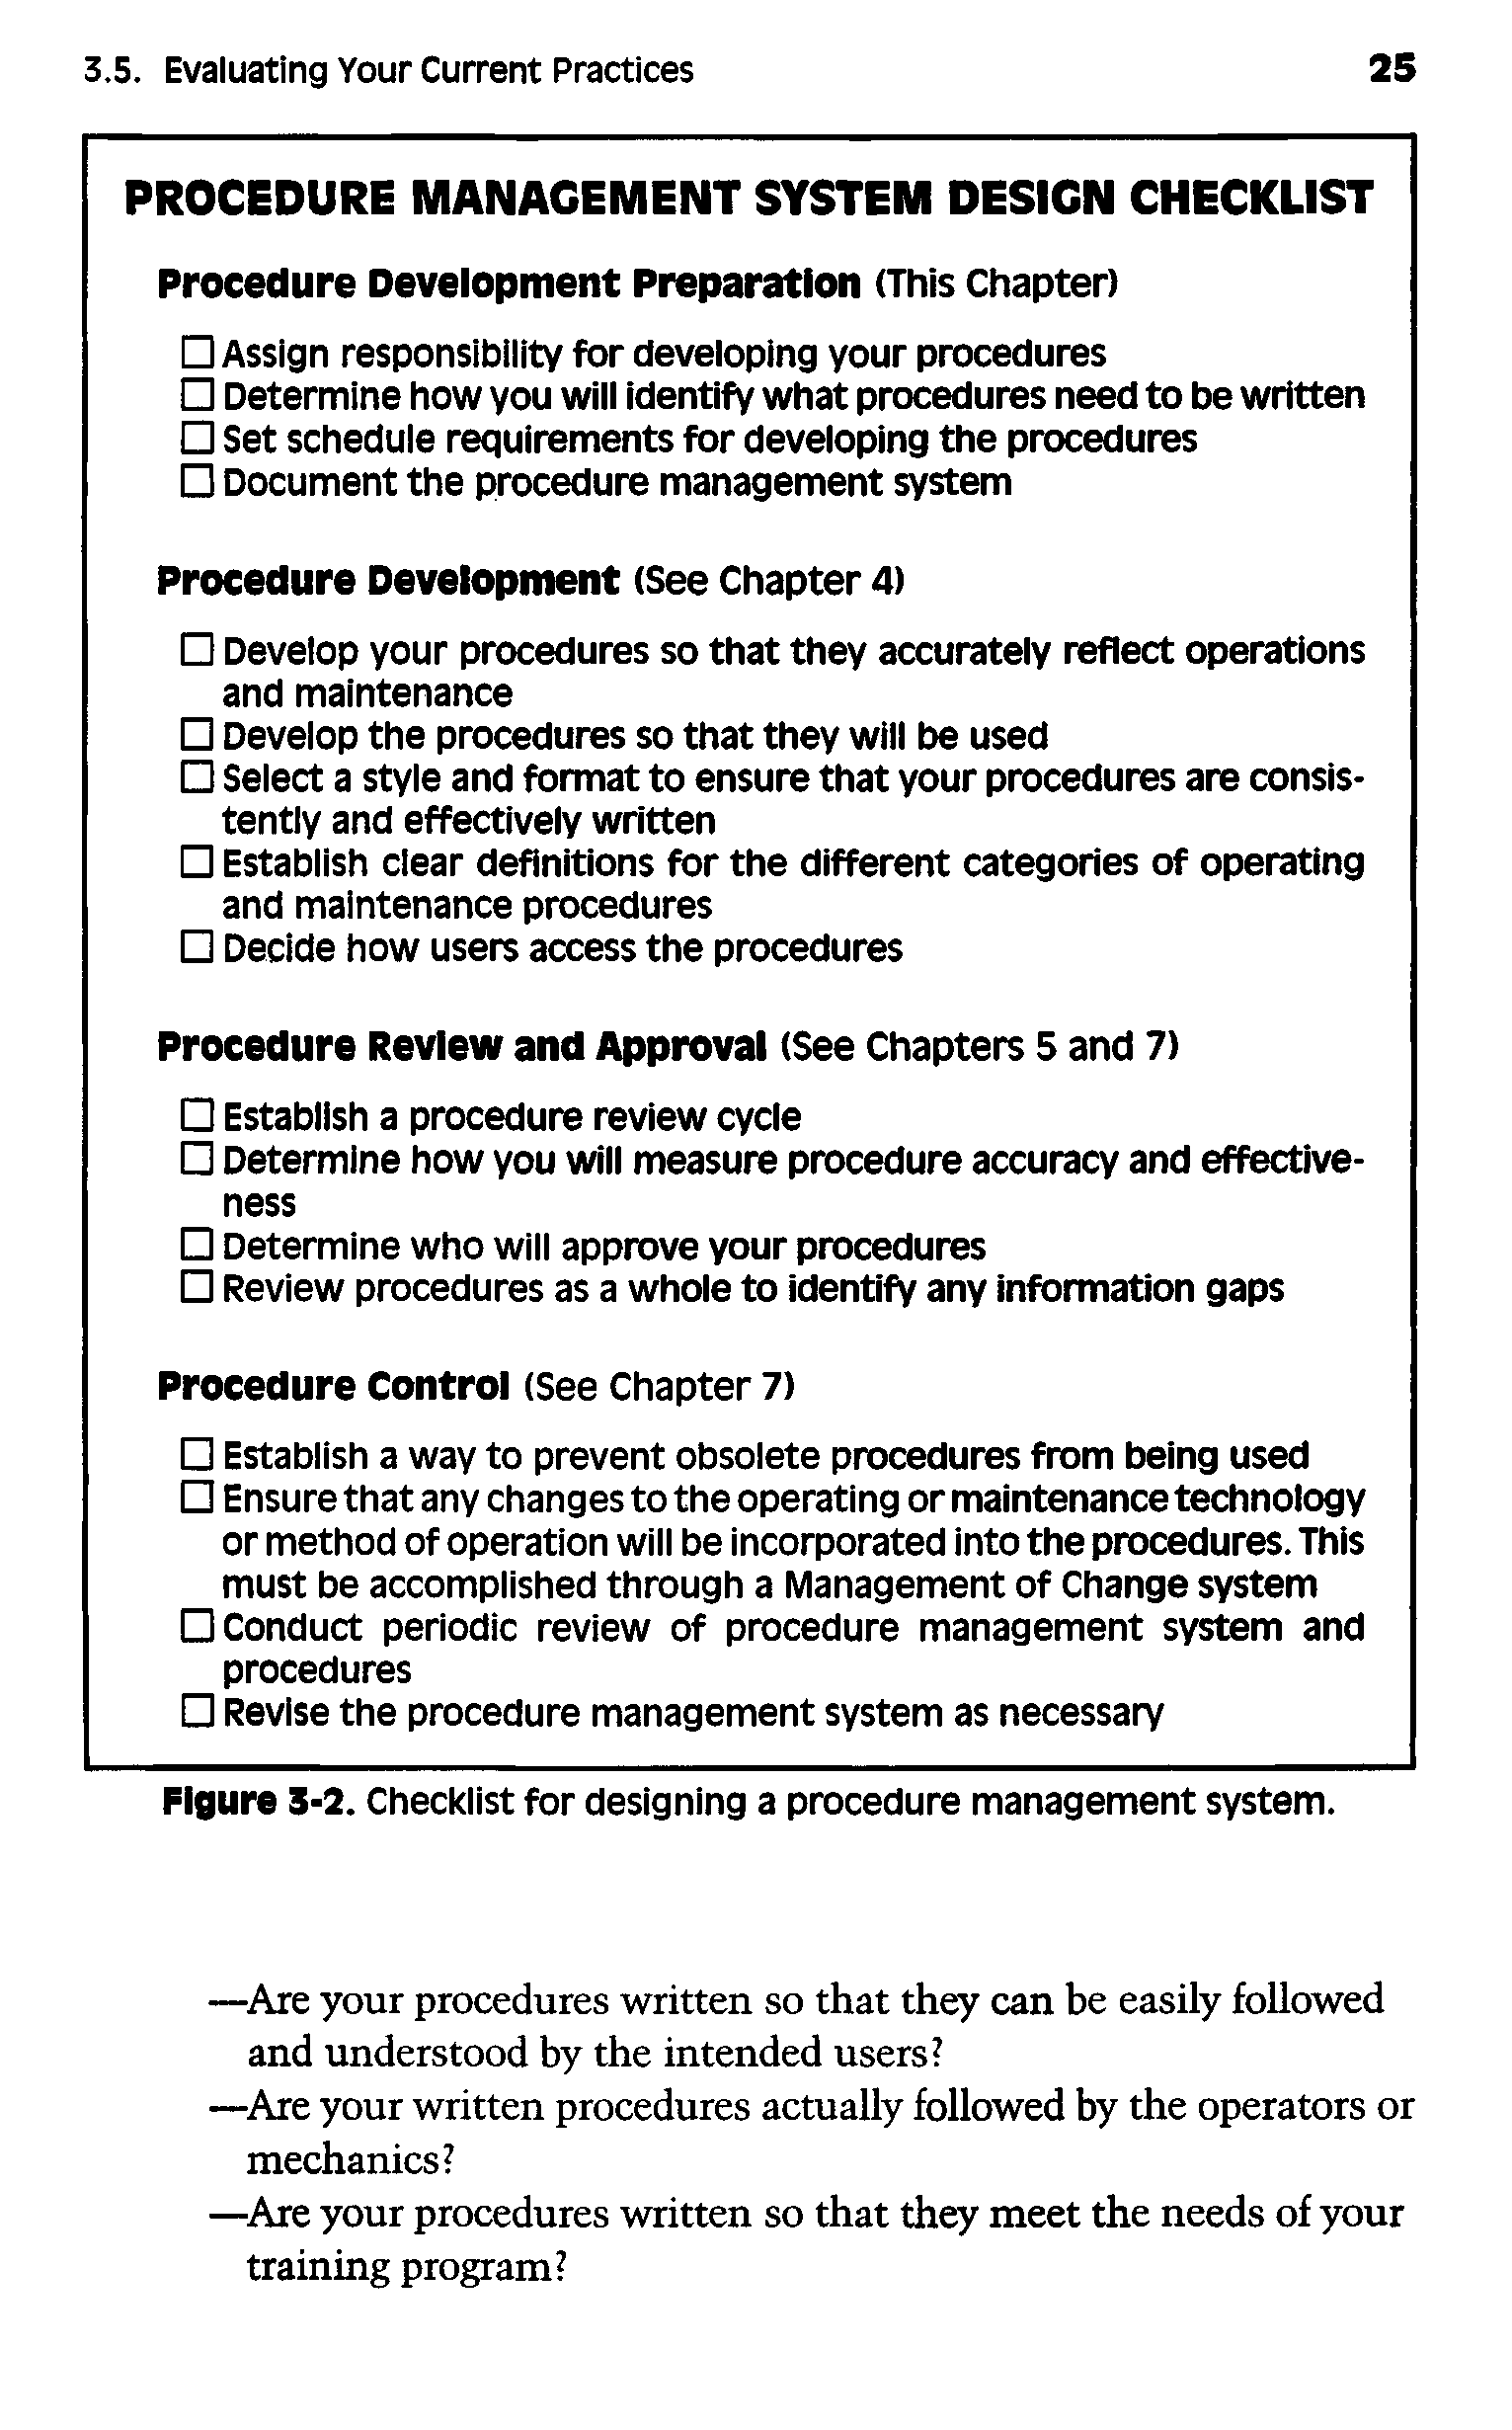 Figure S-2. Checklist for designing a procedure management system.